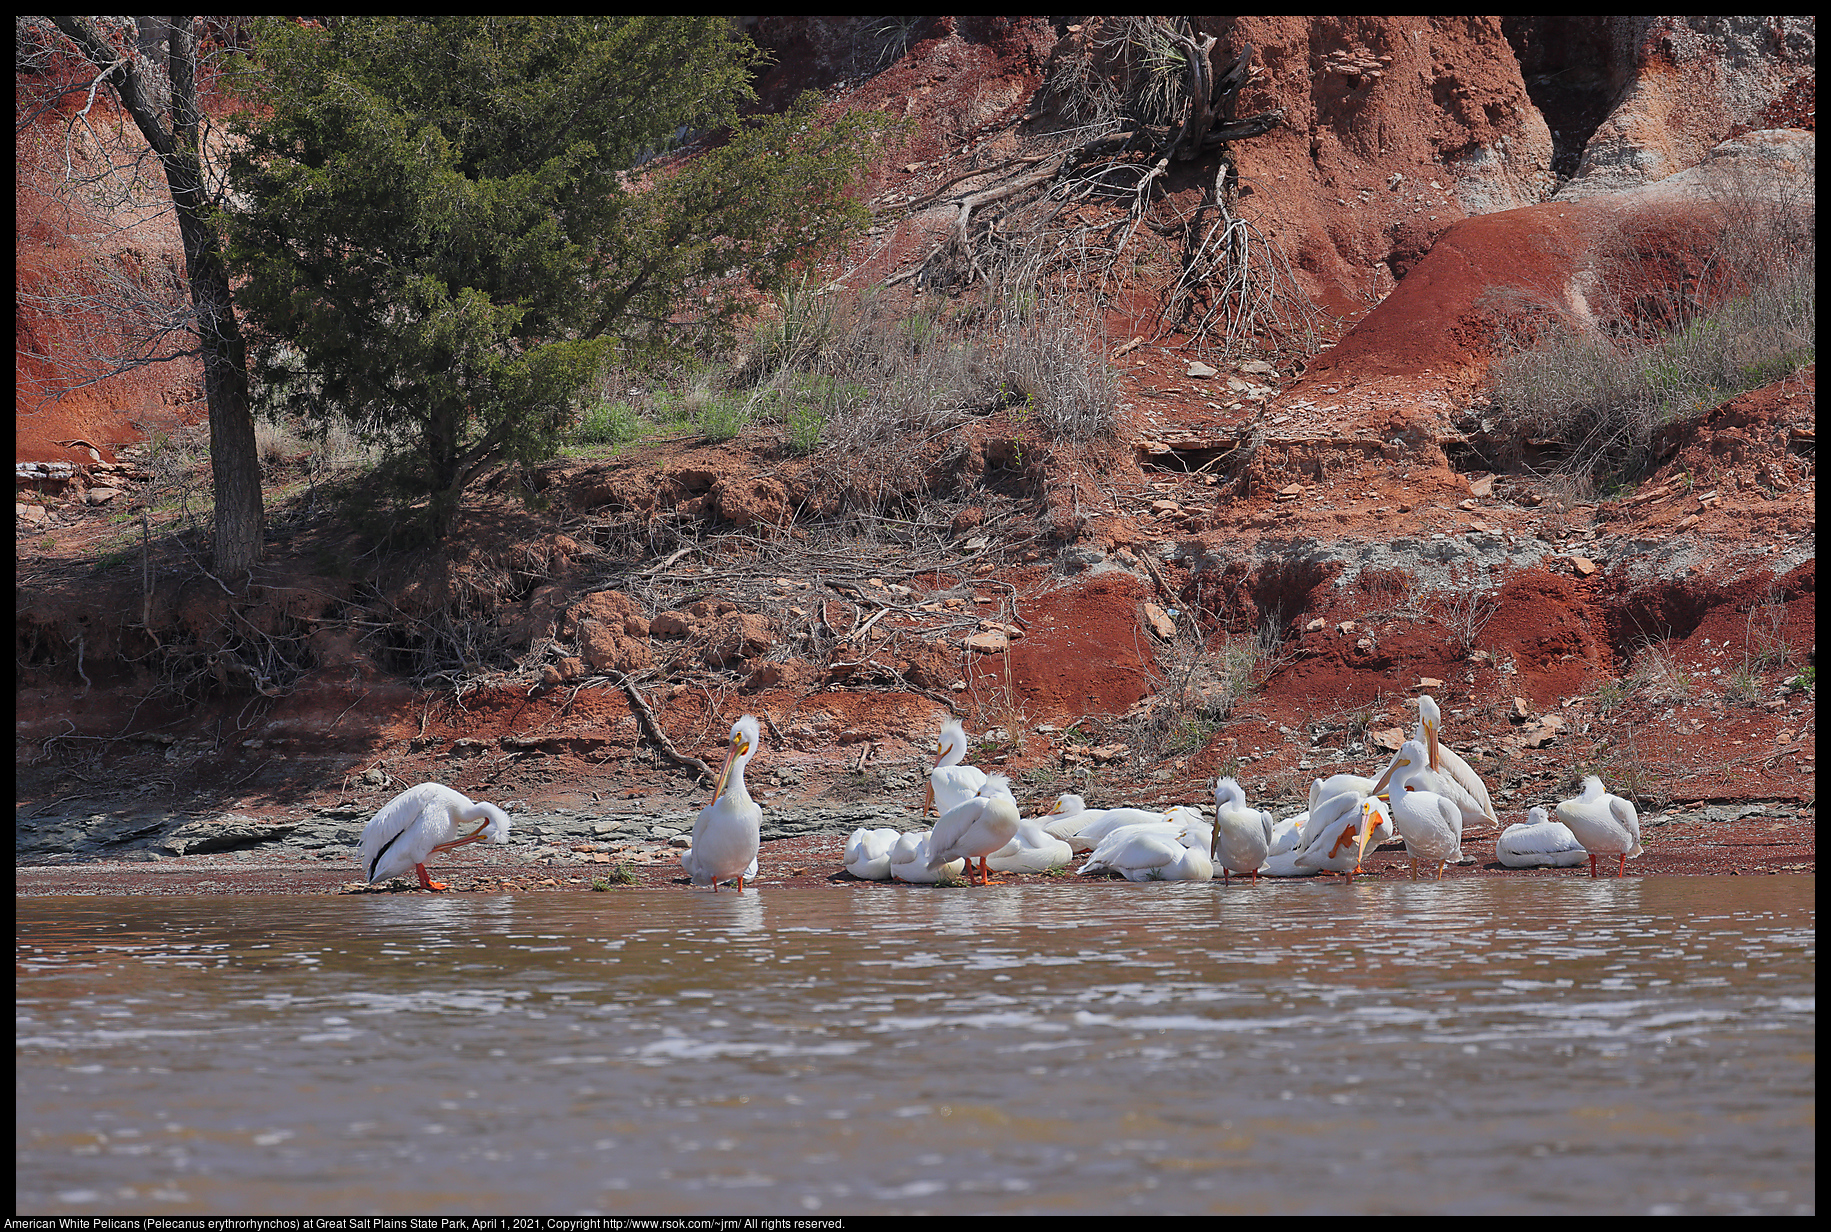 American White Pelicans (Pelecanus erythrorhynchos) at Great Salt Plains State Park, April 1, 2021